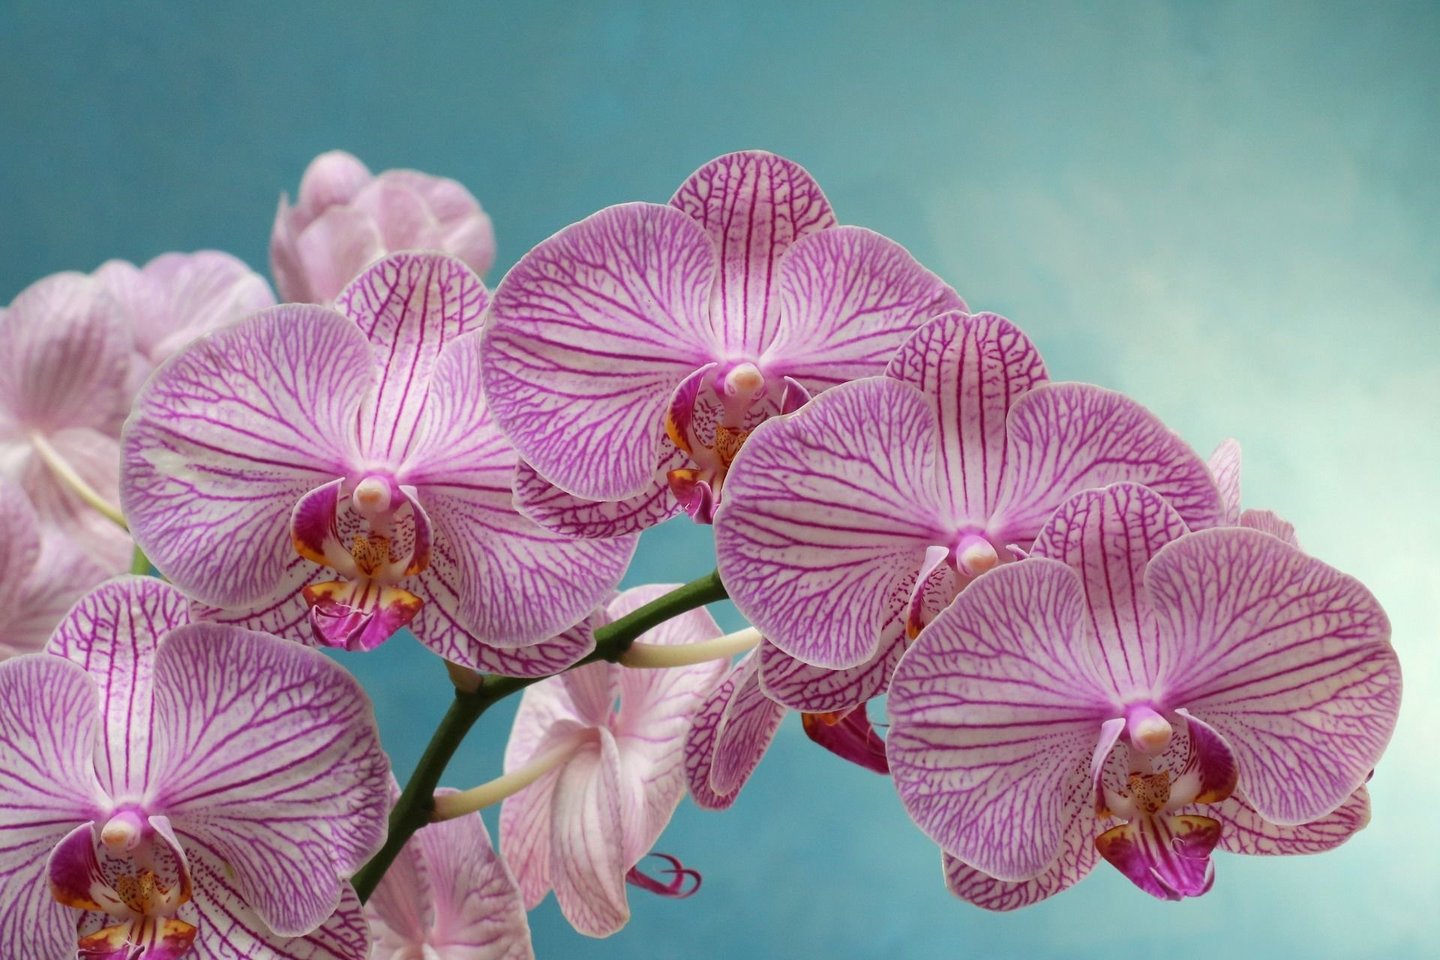  Orchidėja.<br> Pixabay nuotr.     